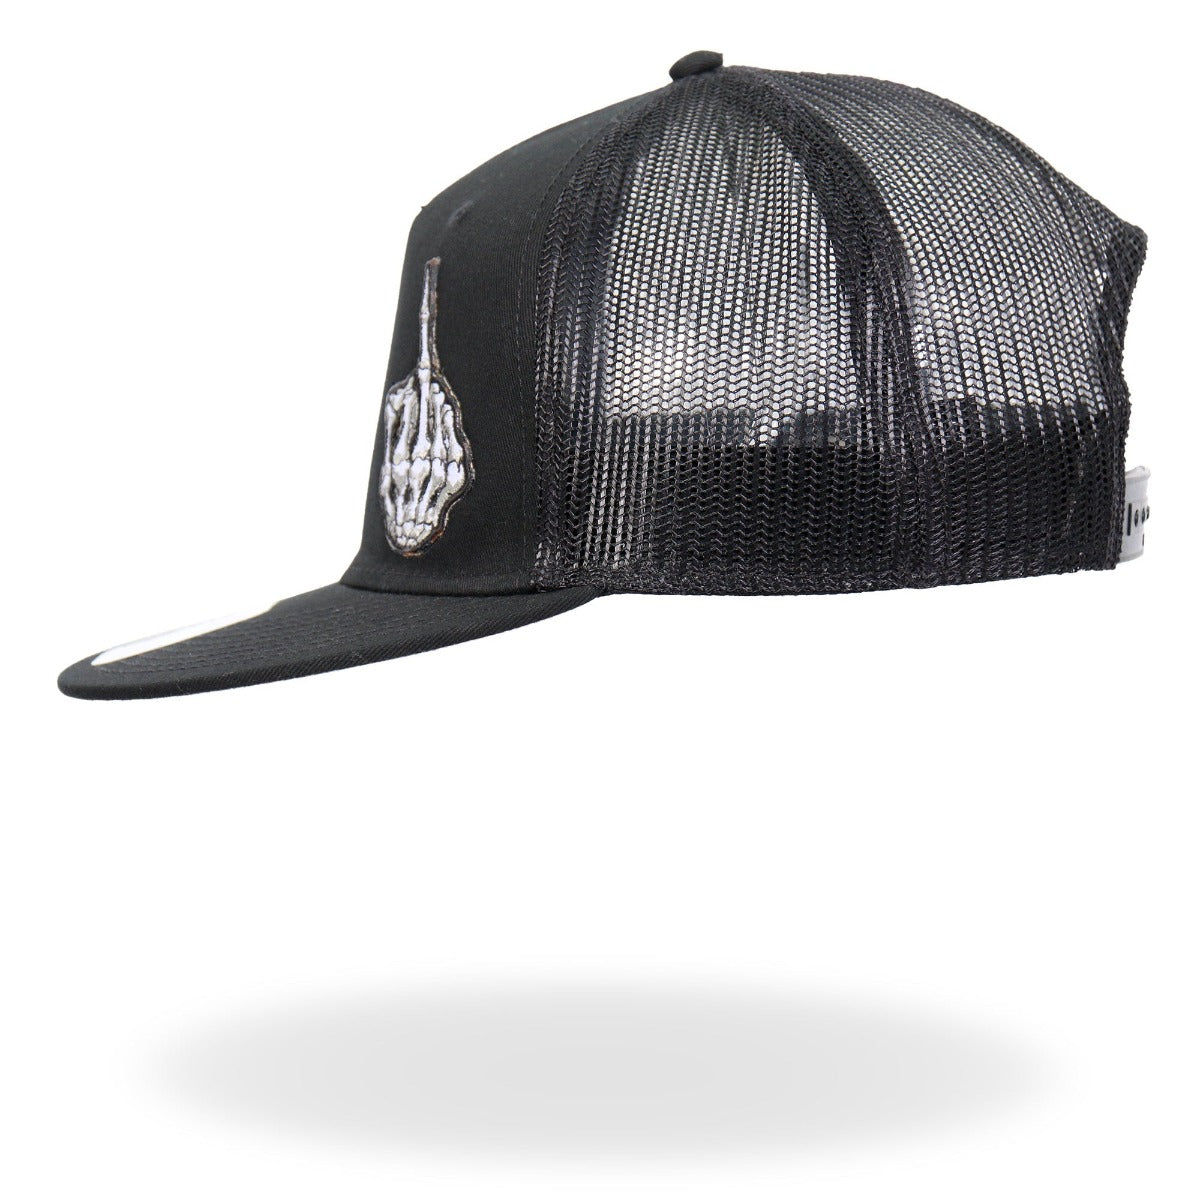 A high quality, Hot Leathers Black Skeleton Hand DILLIGAF Snapback Hat with an original artwork logo on it.